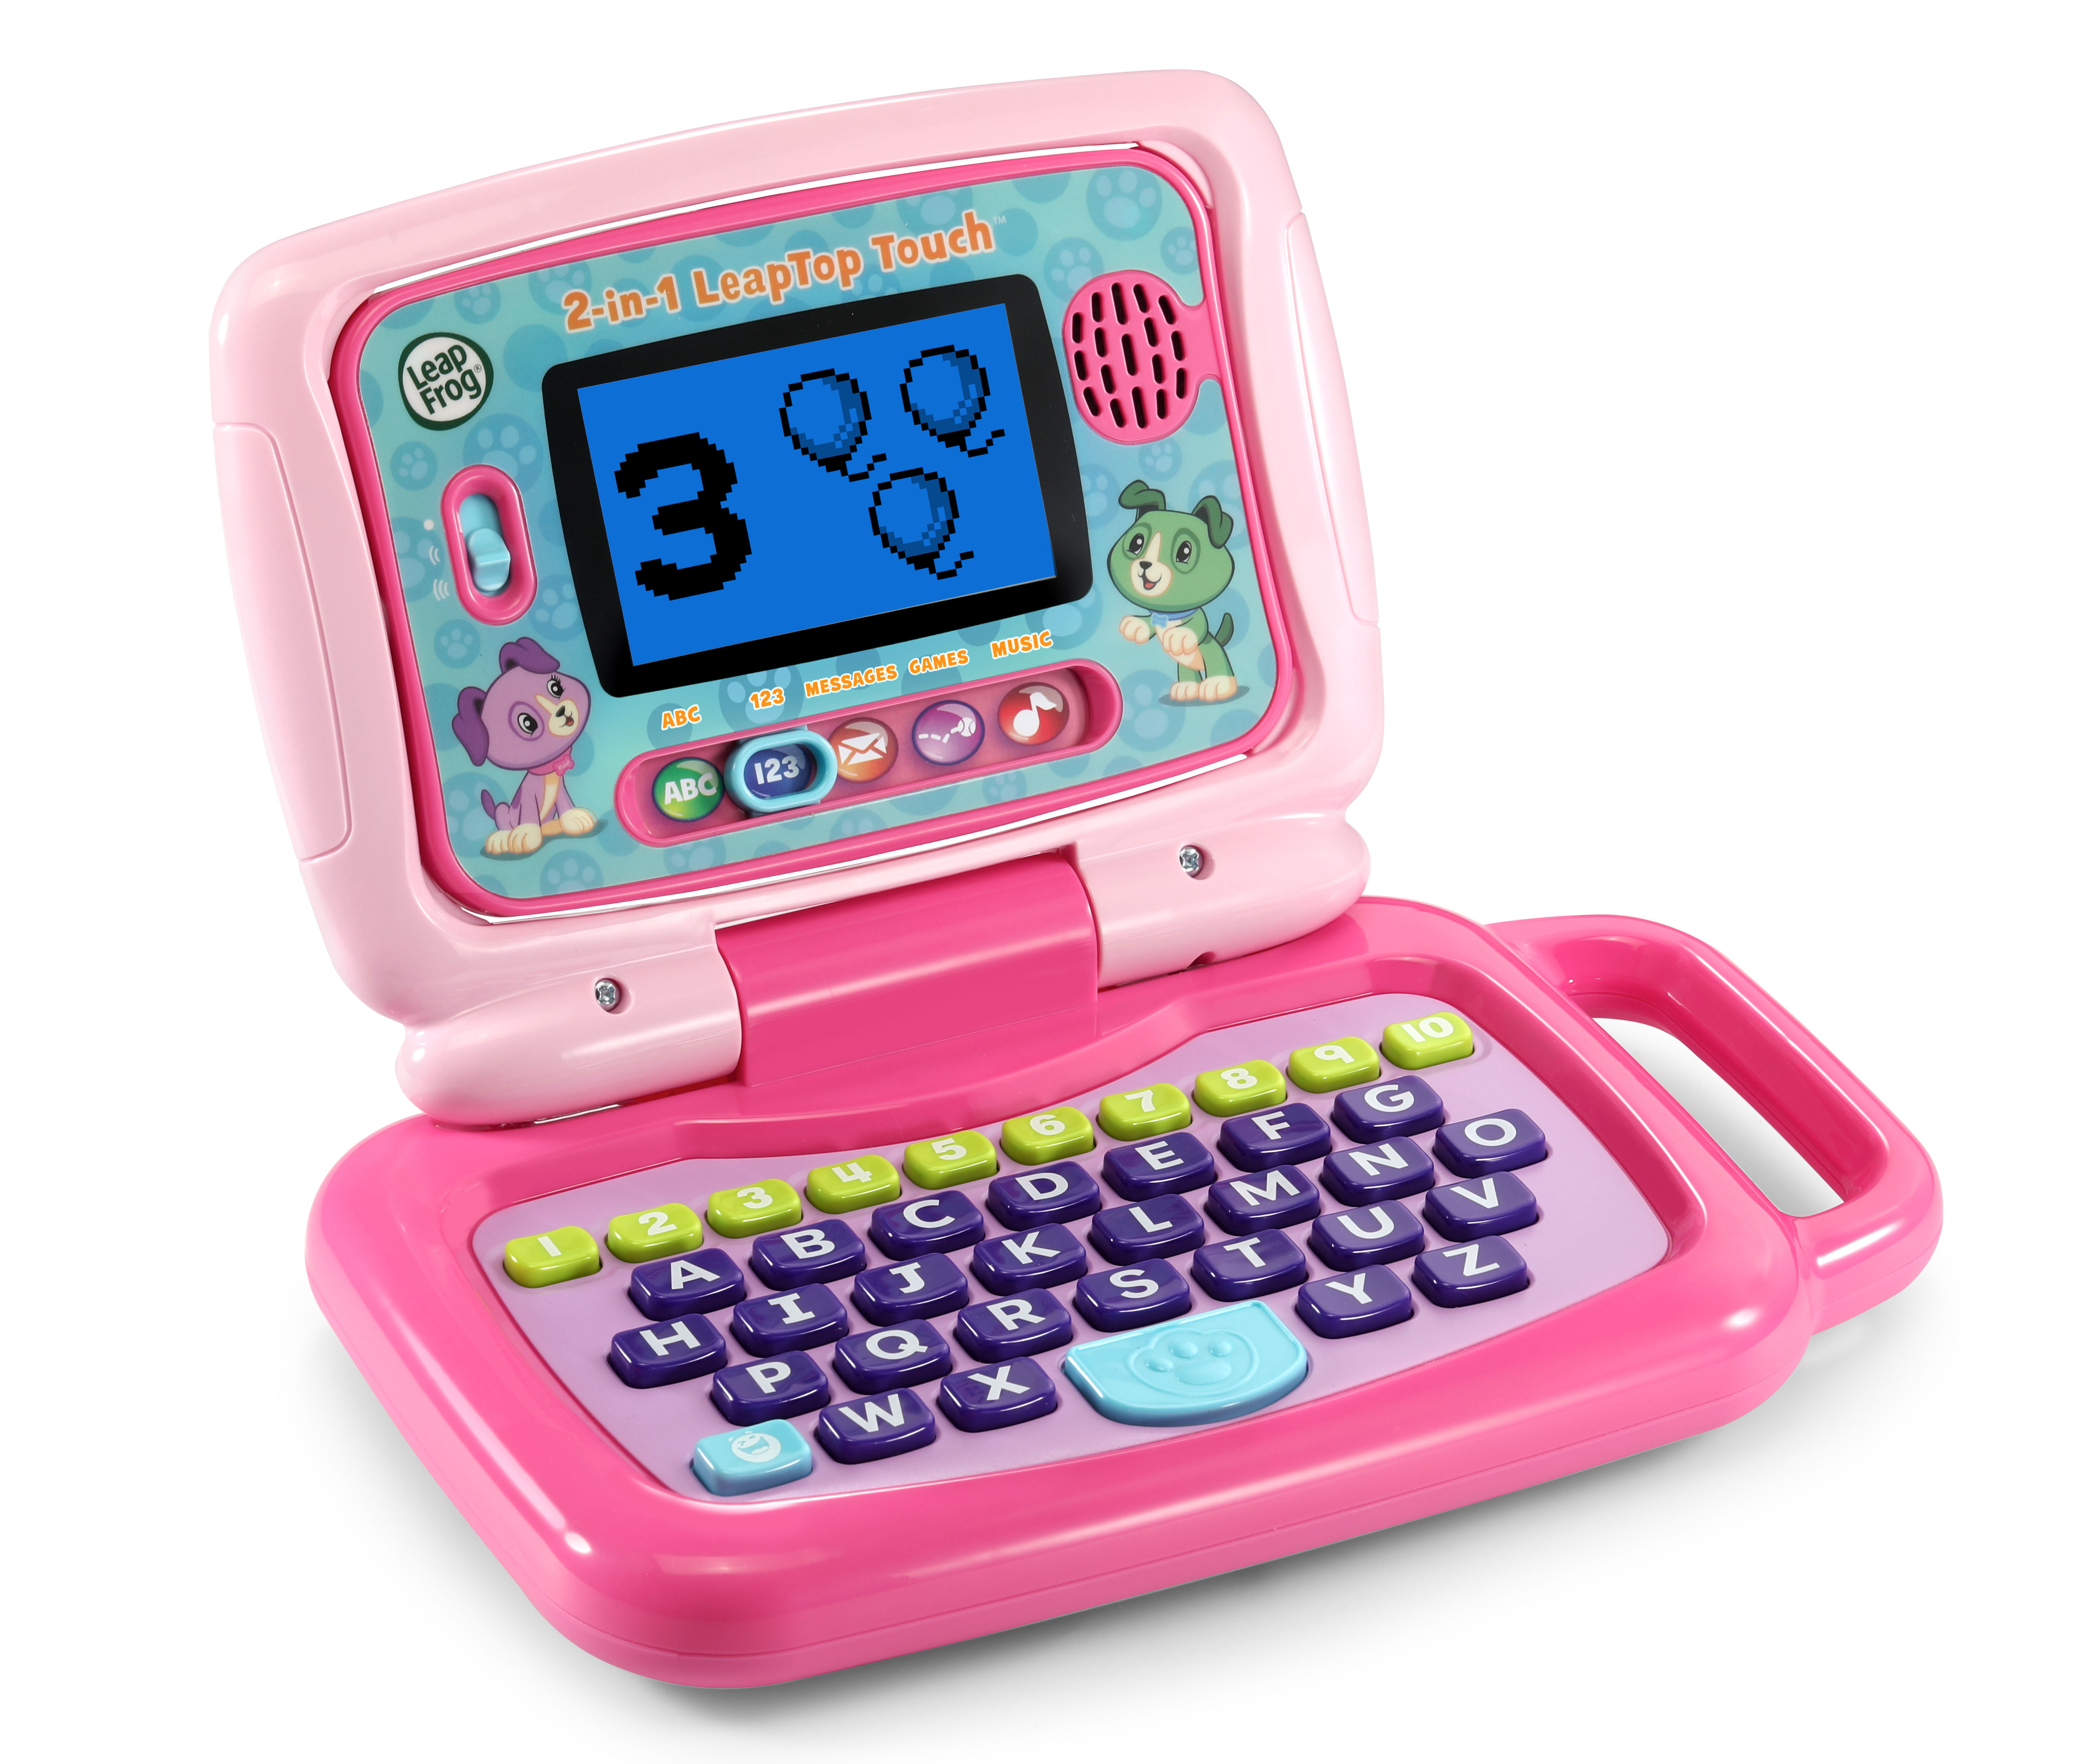 leapfrog pink computer